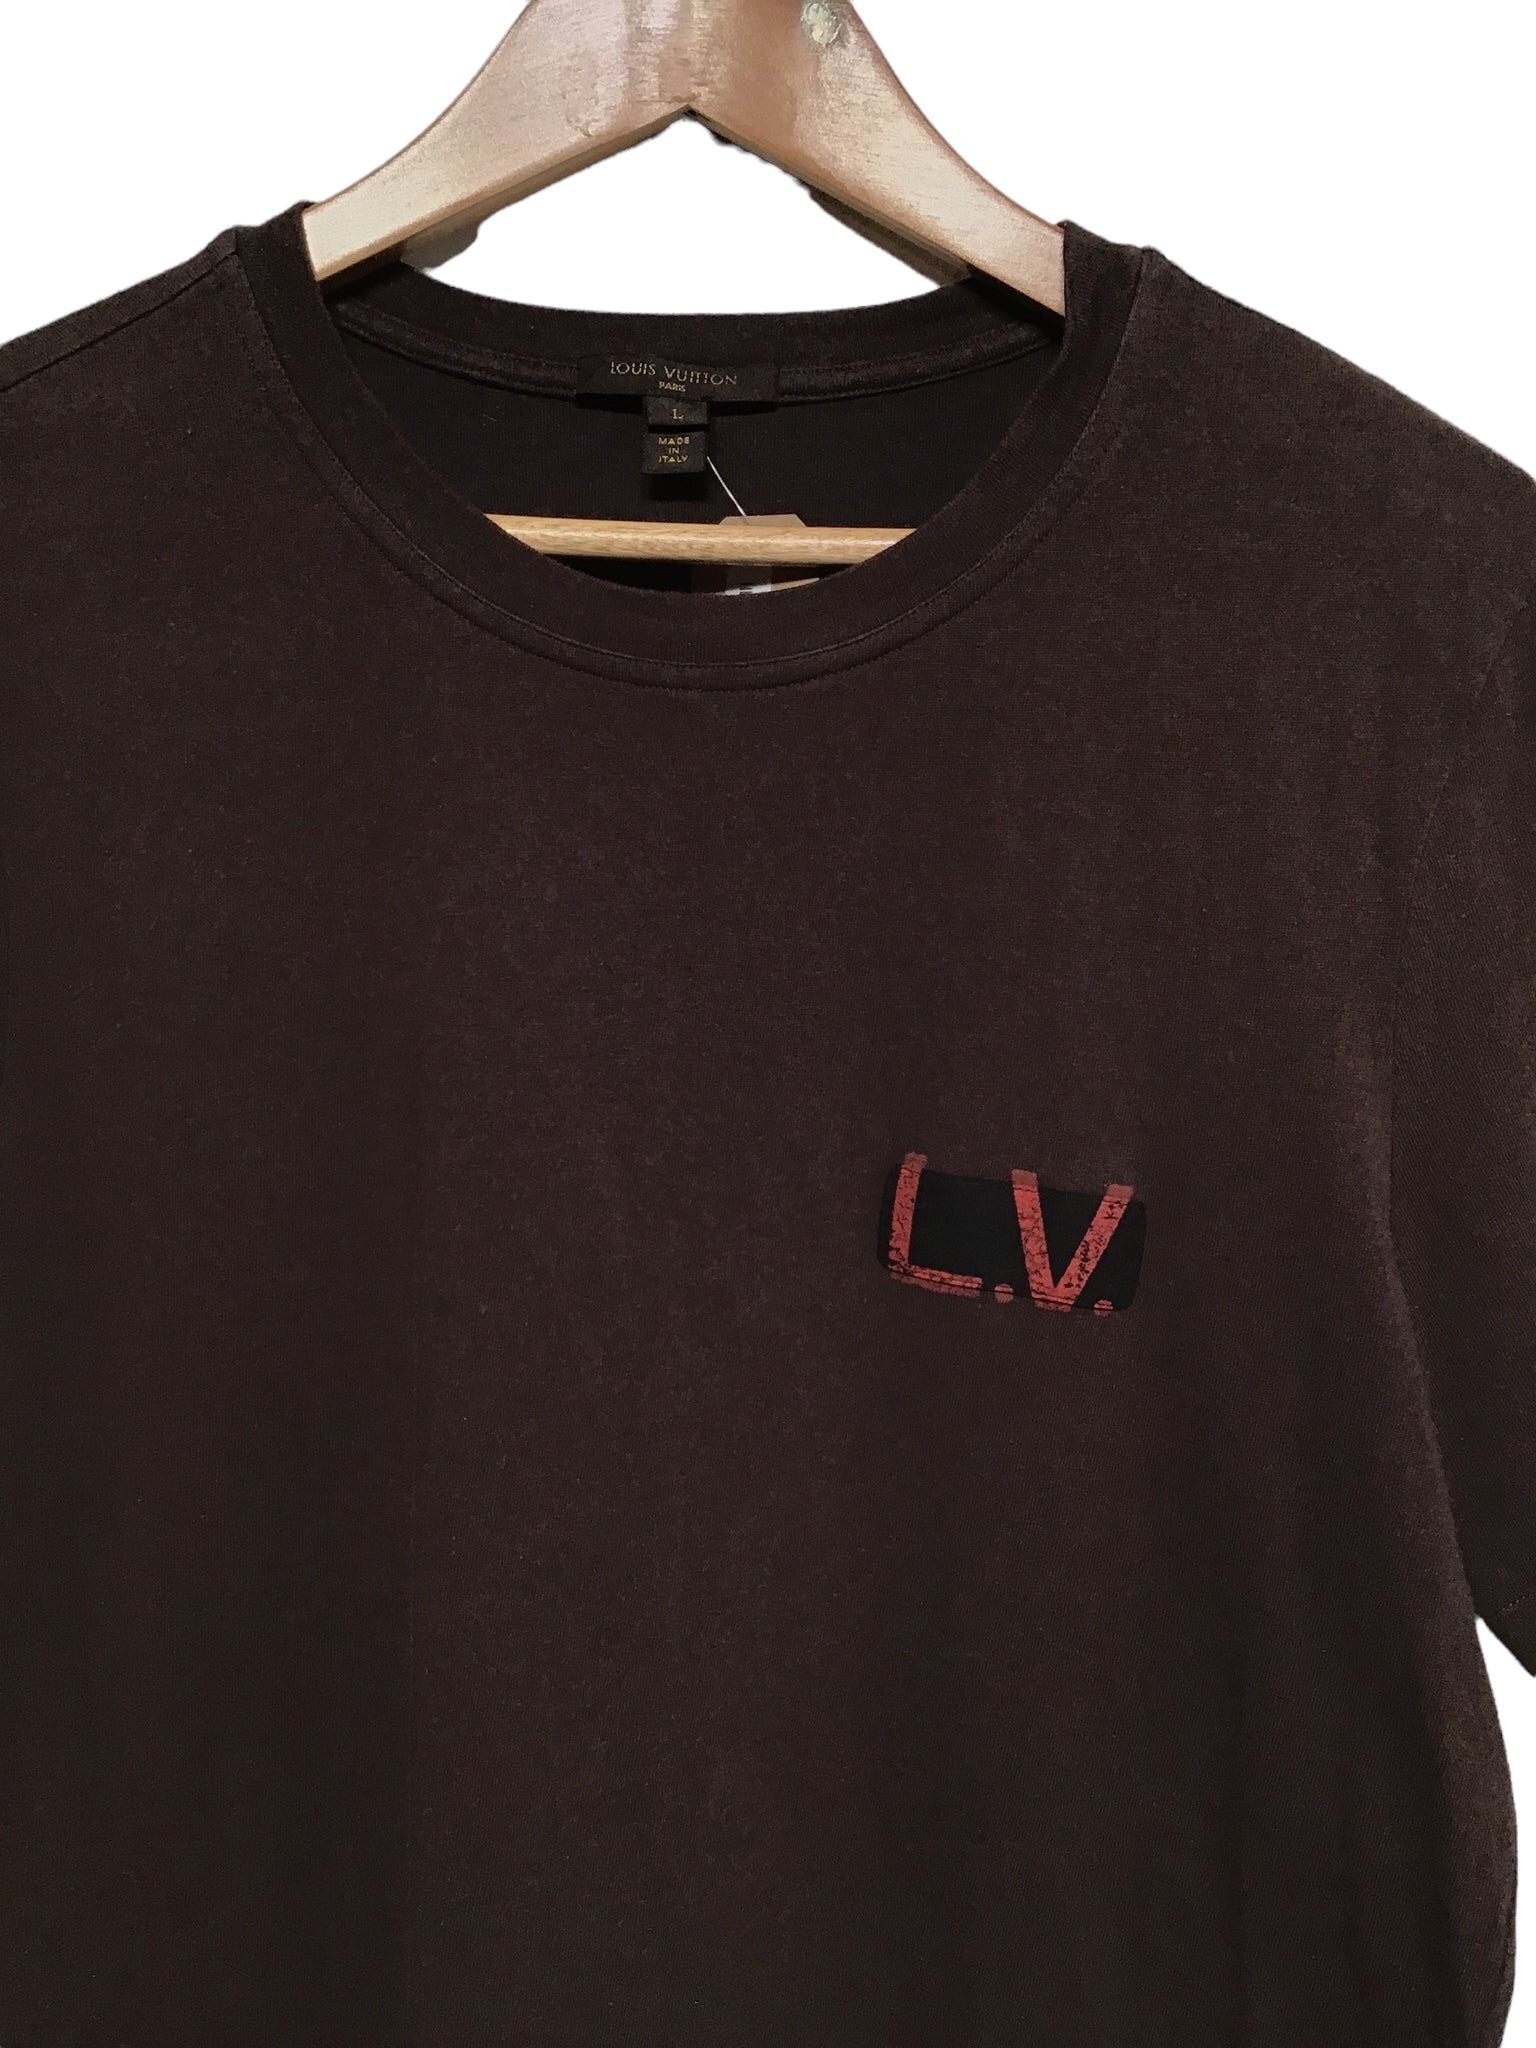 Buy Best louis+vuitton+t+shirt+men Online At Cheap Price, louis+vuitton+t+ shirt+men & Bahrain Shopping